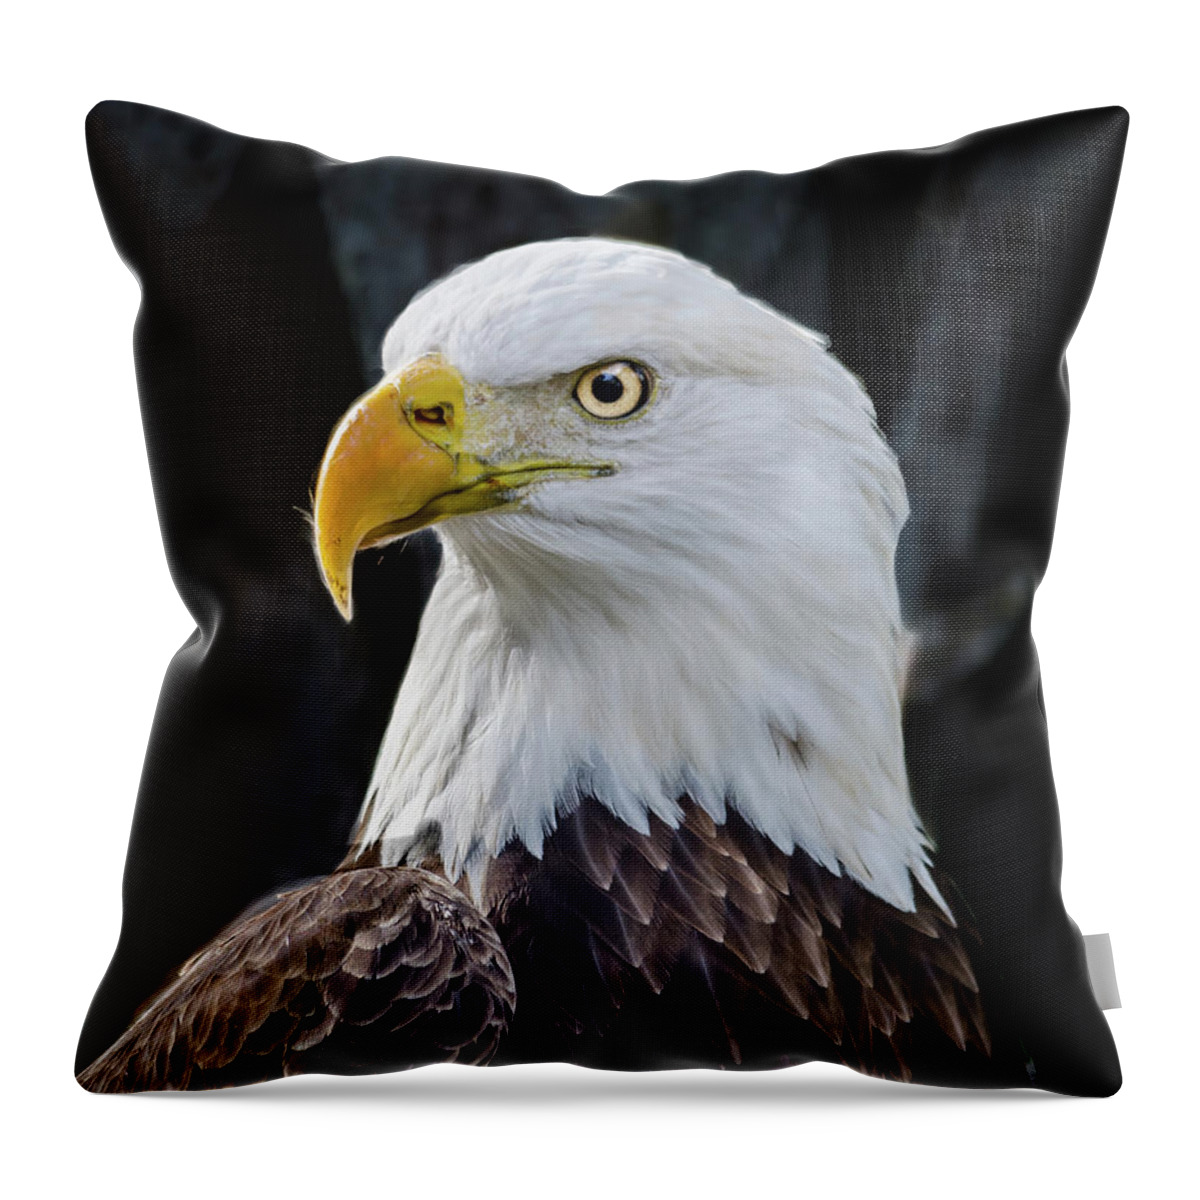 American Eagle Throw Pillow featuring the photograph American Eagle by Jaime Mercado